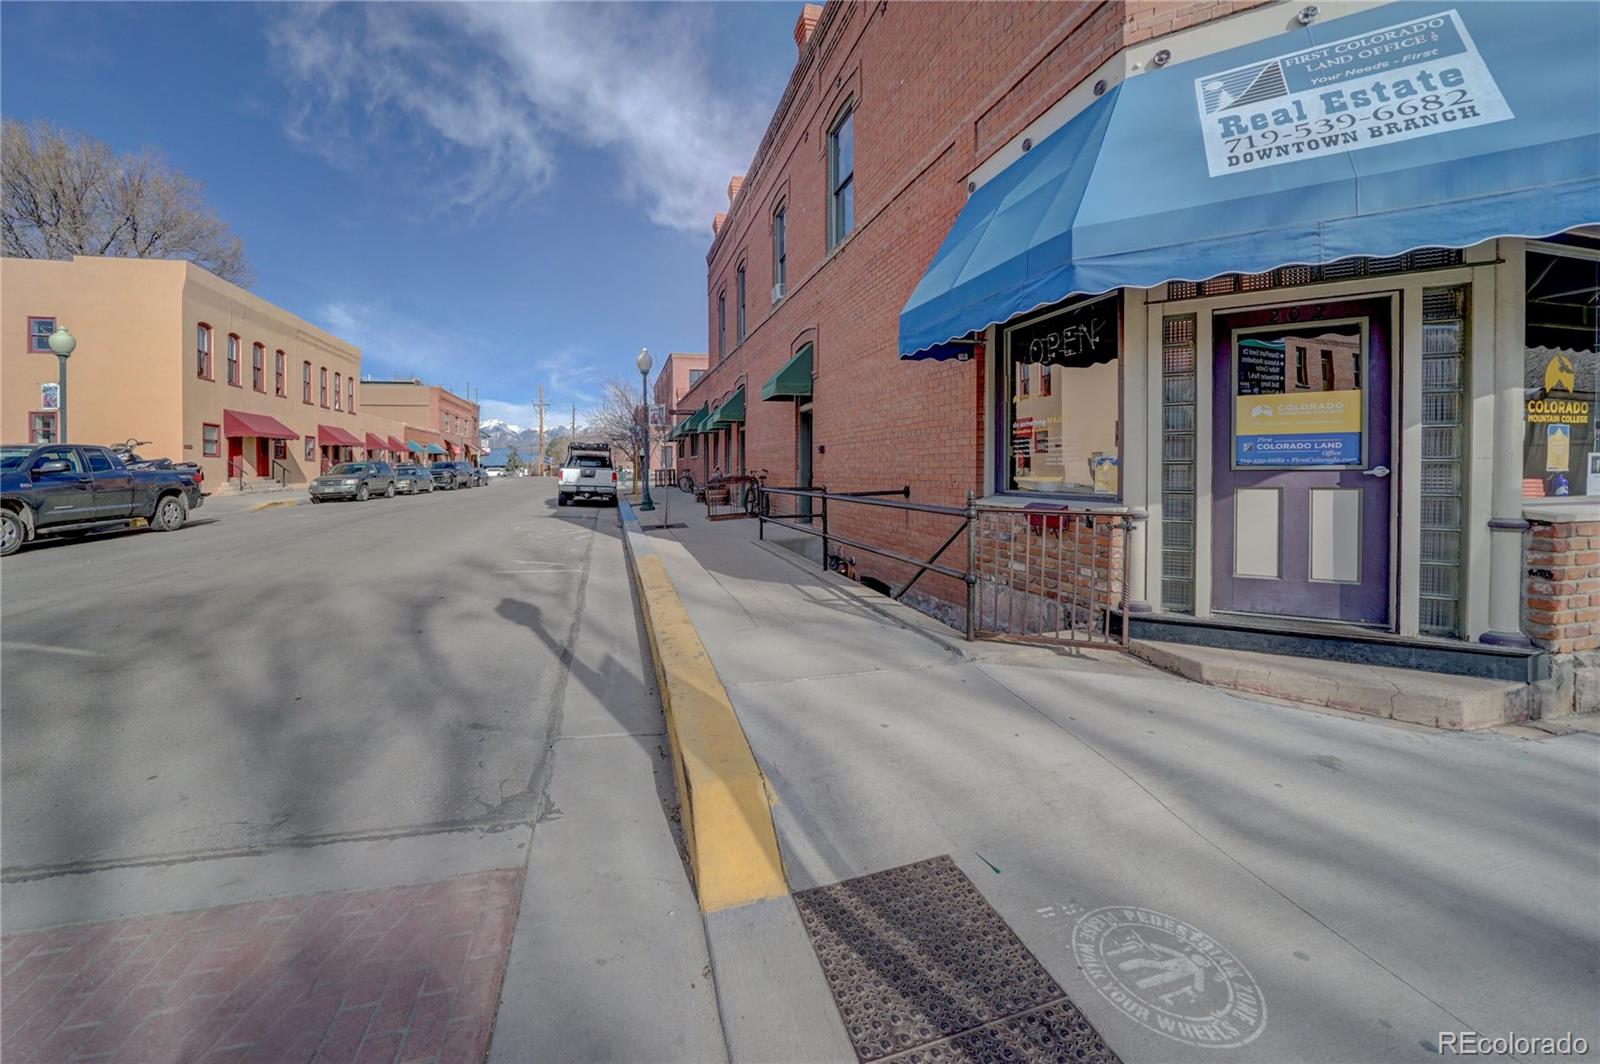 Report Image for 202 N F Street,Salida, Colorado